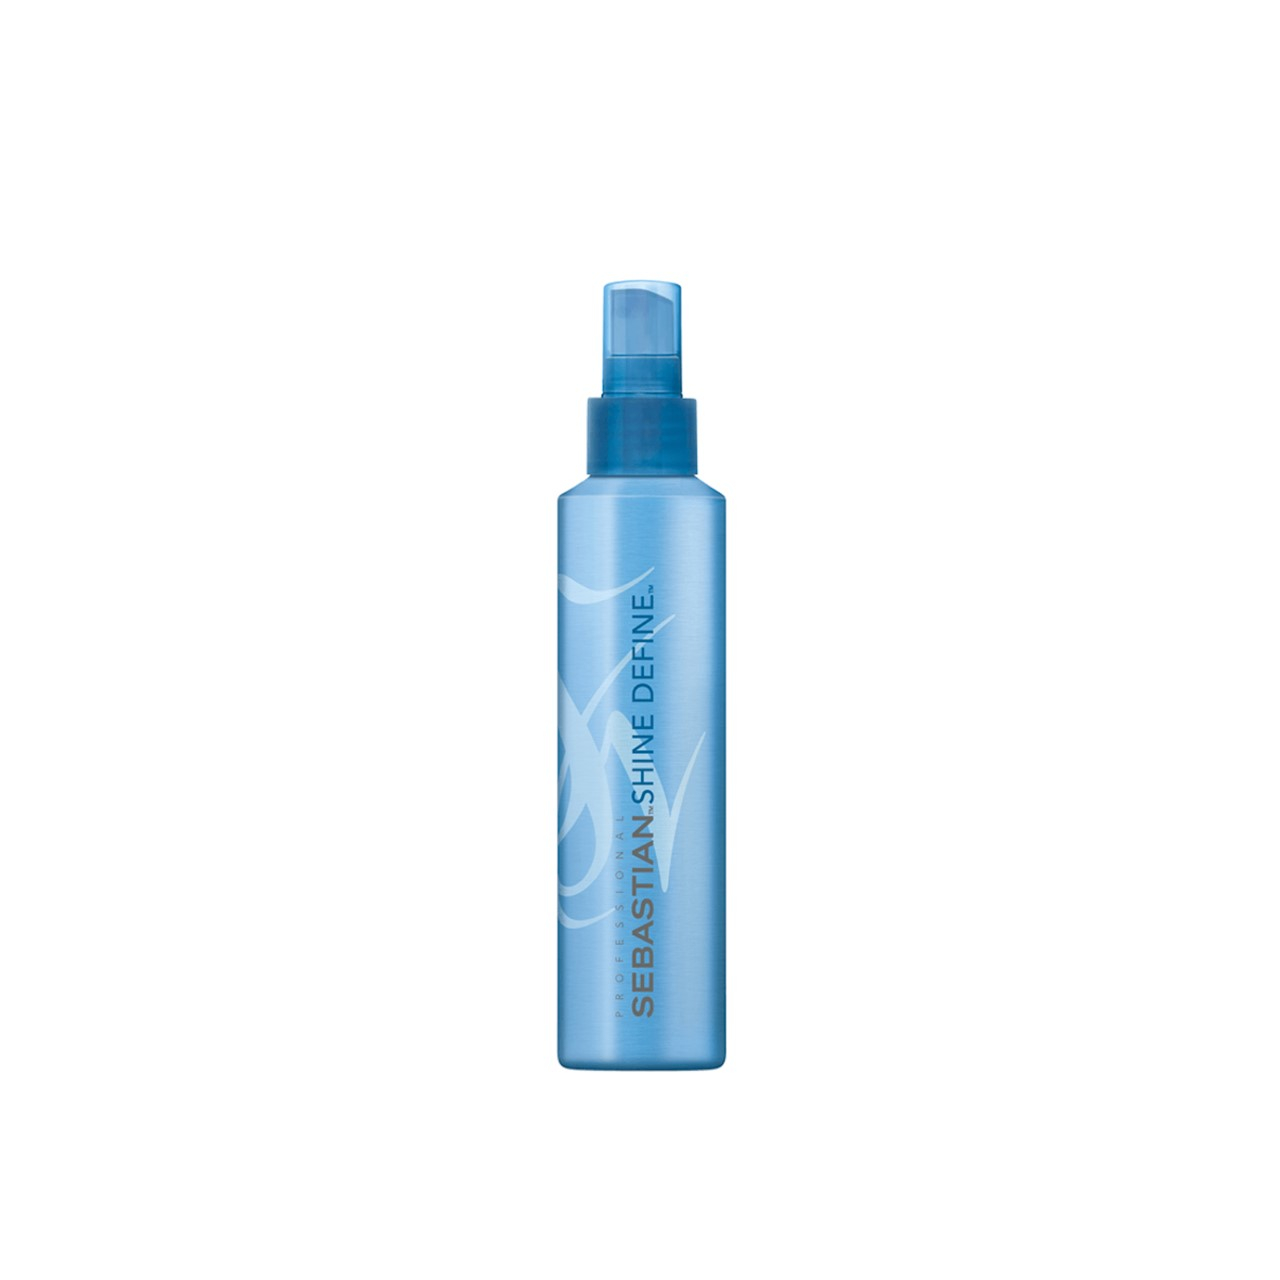 Sebastian Professional Shine Define Flexible Hold Hairspray 200ml (6.76fl oz)